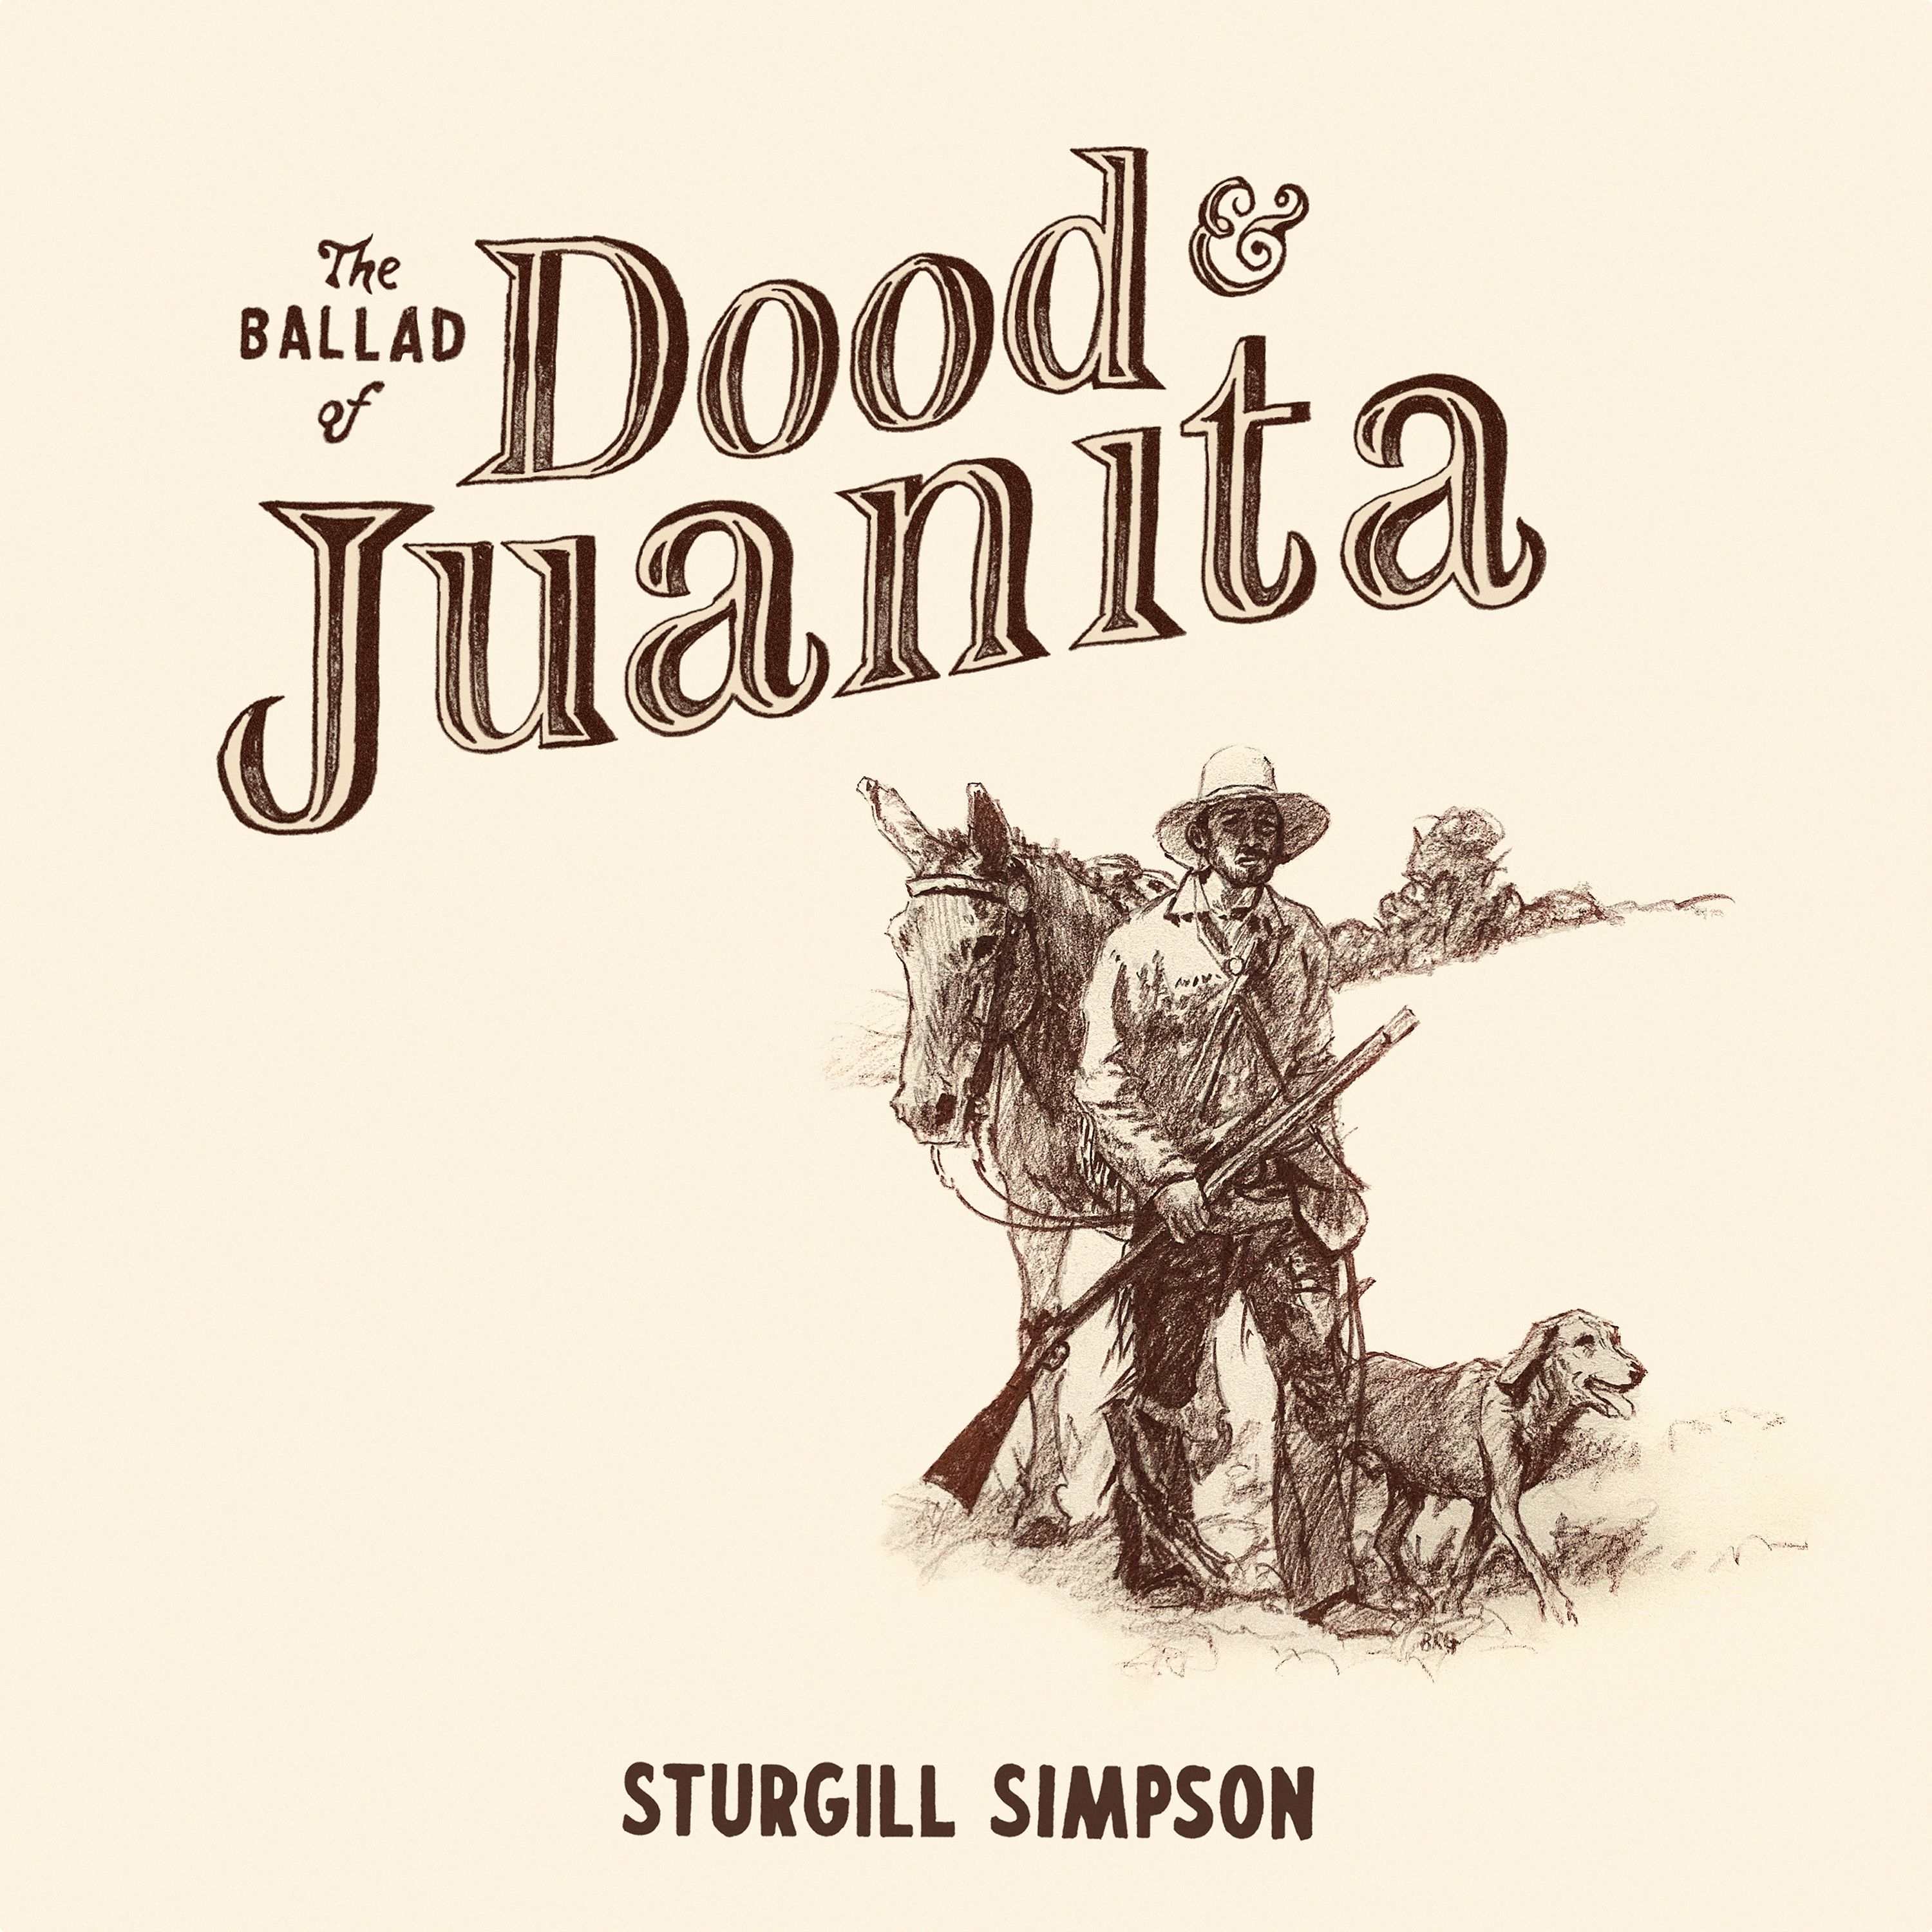 Sturgill Simpson – The Ballad of Dood and Juanita